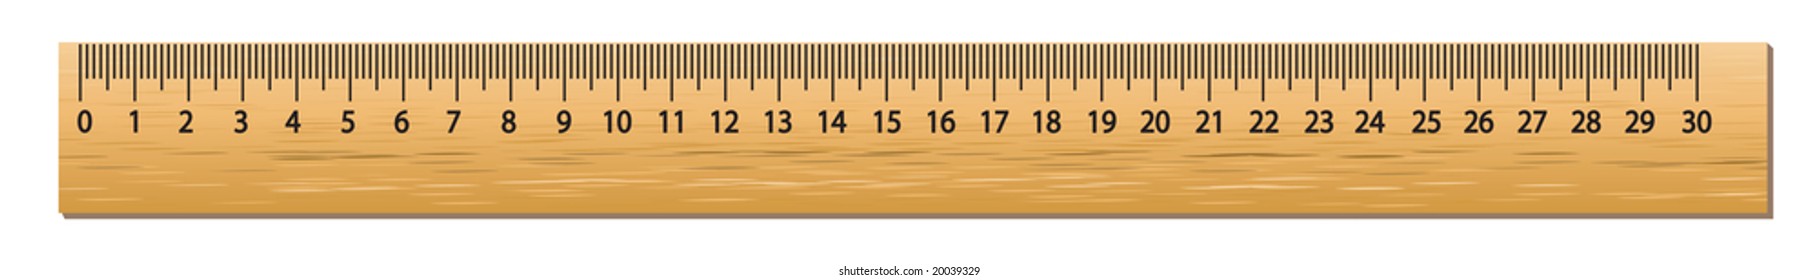 one foot ruler